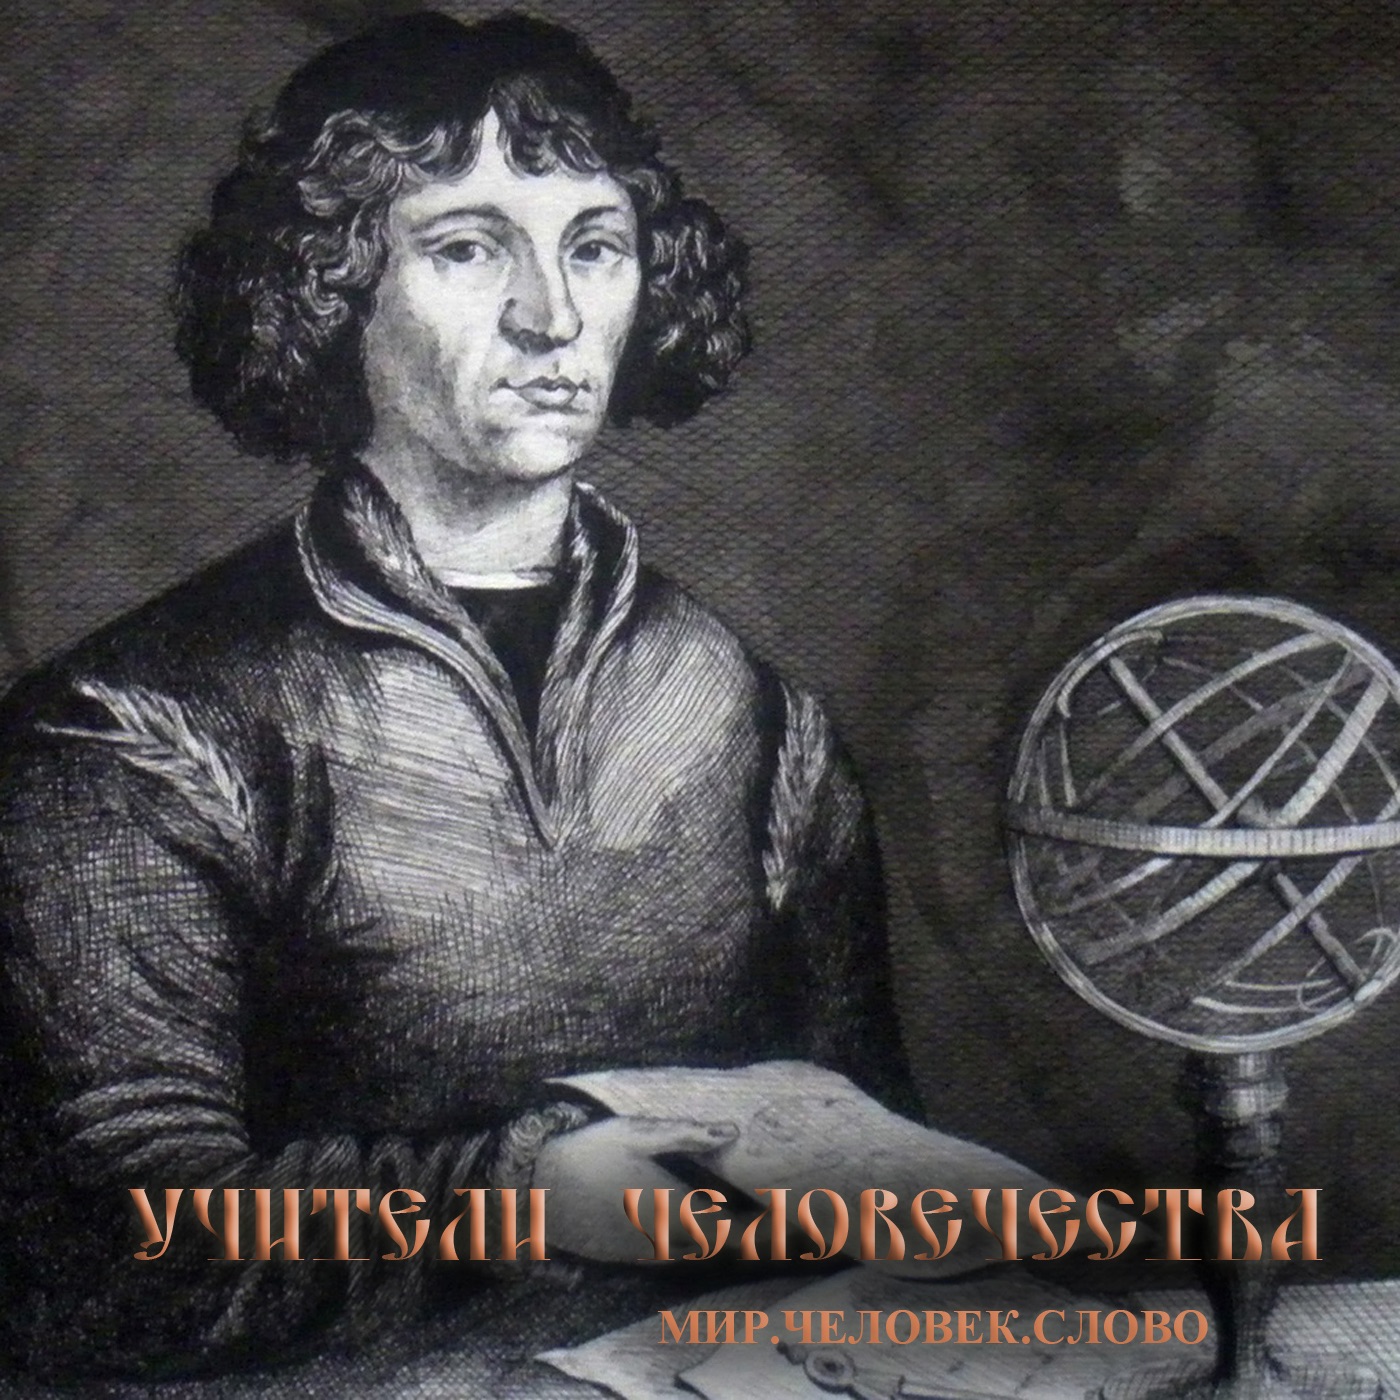 Коперникус. Коперник портрет. Портрет Николая Коперника.